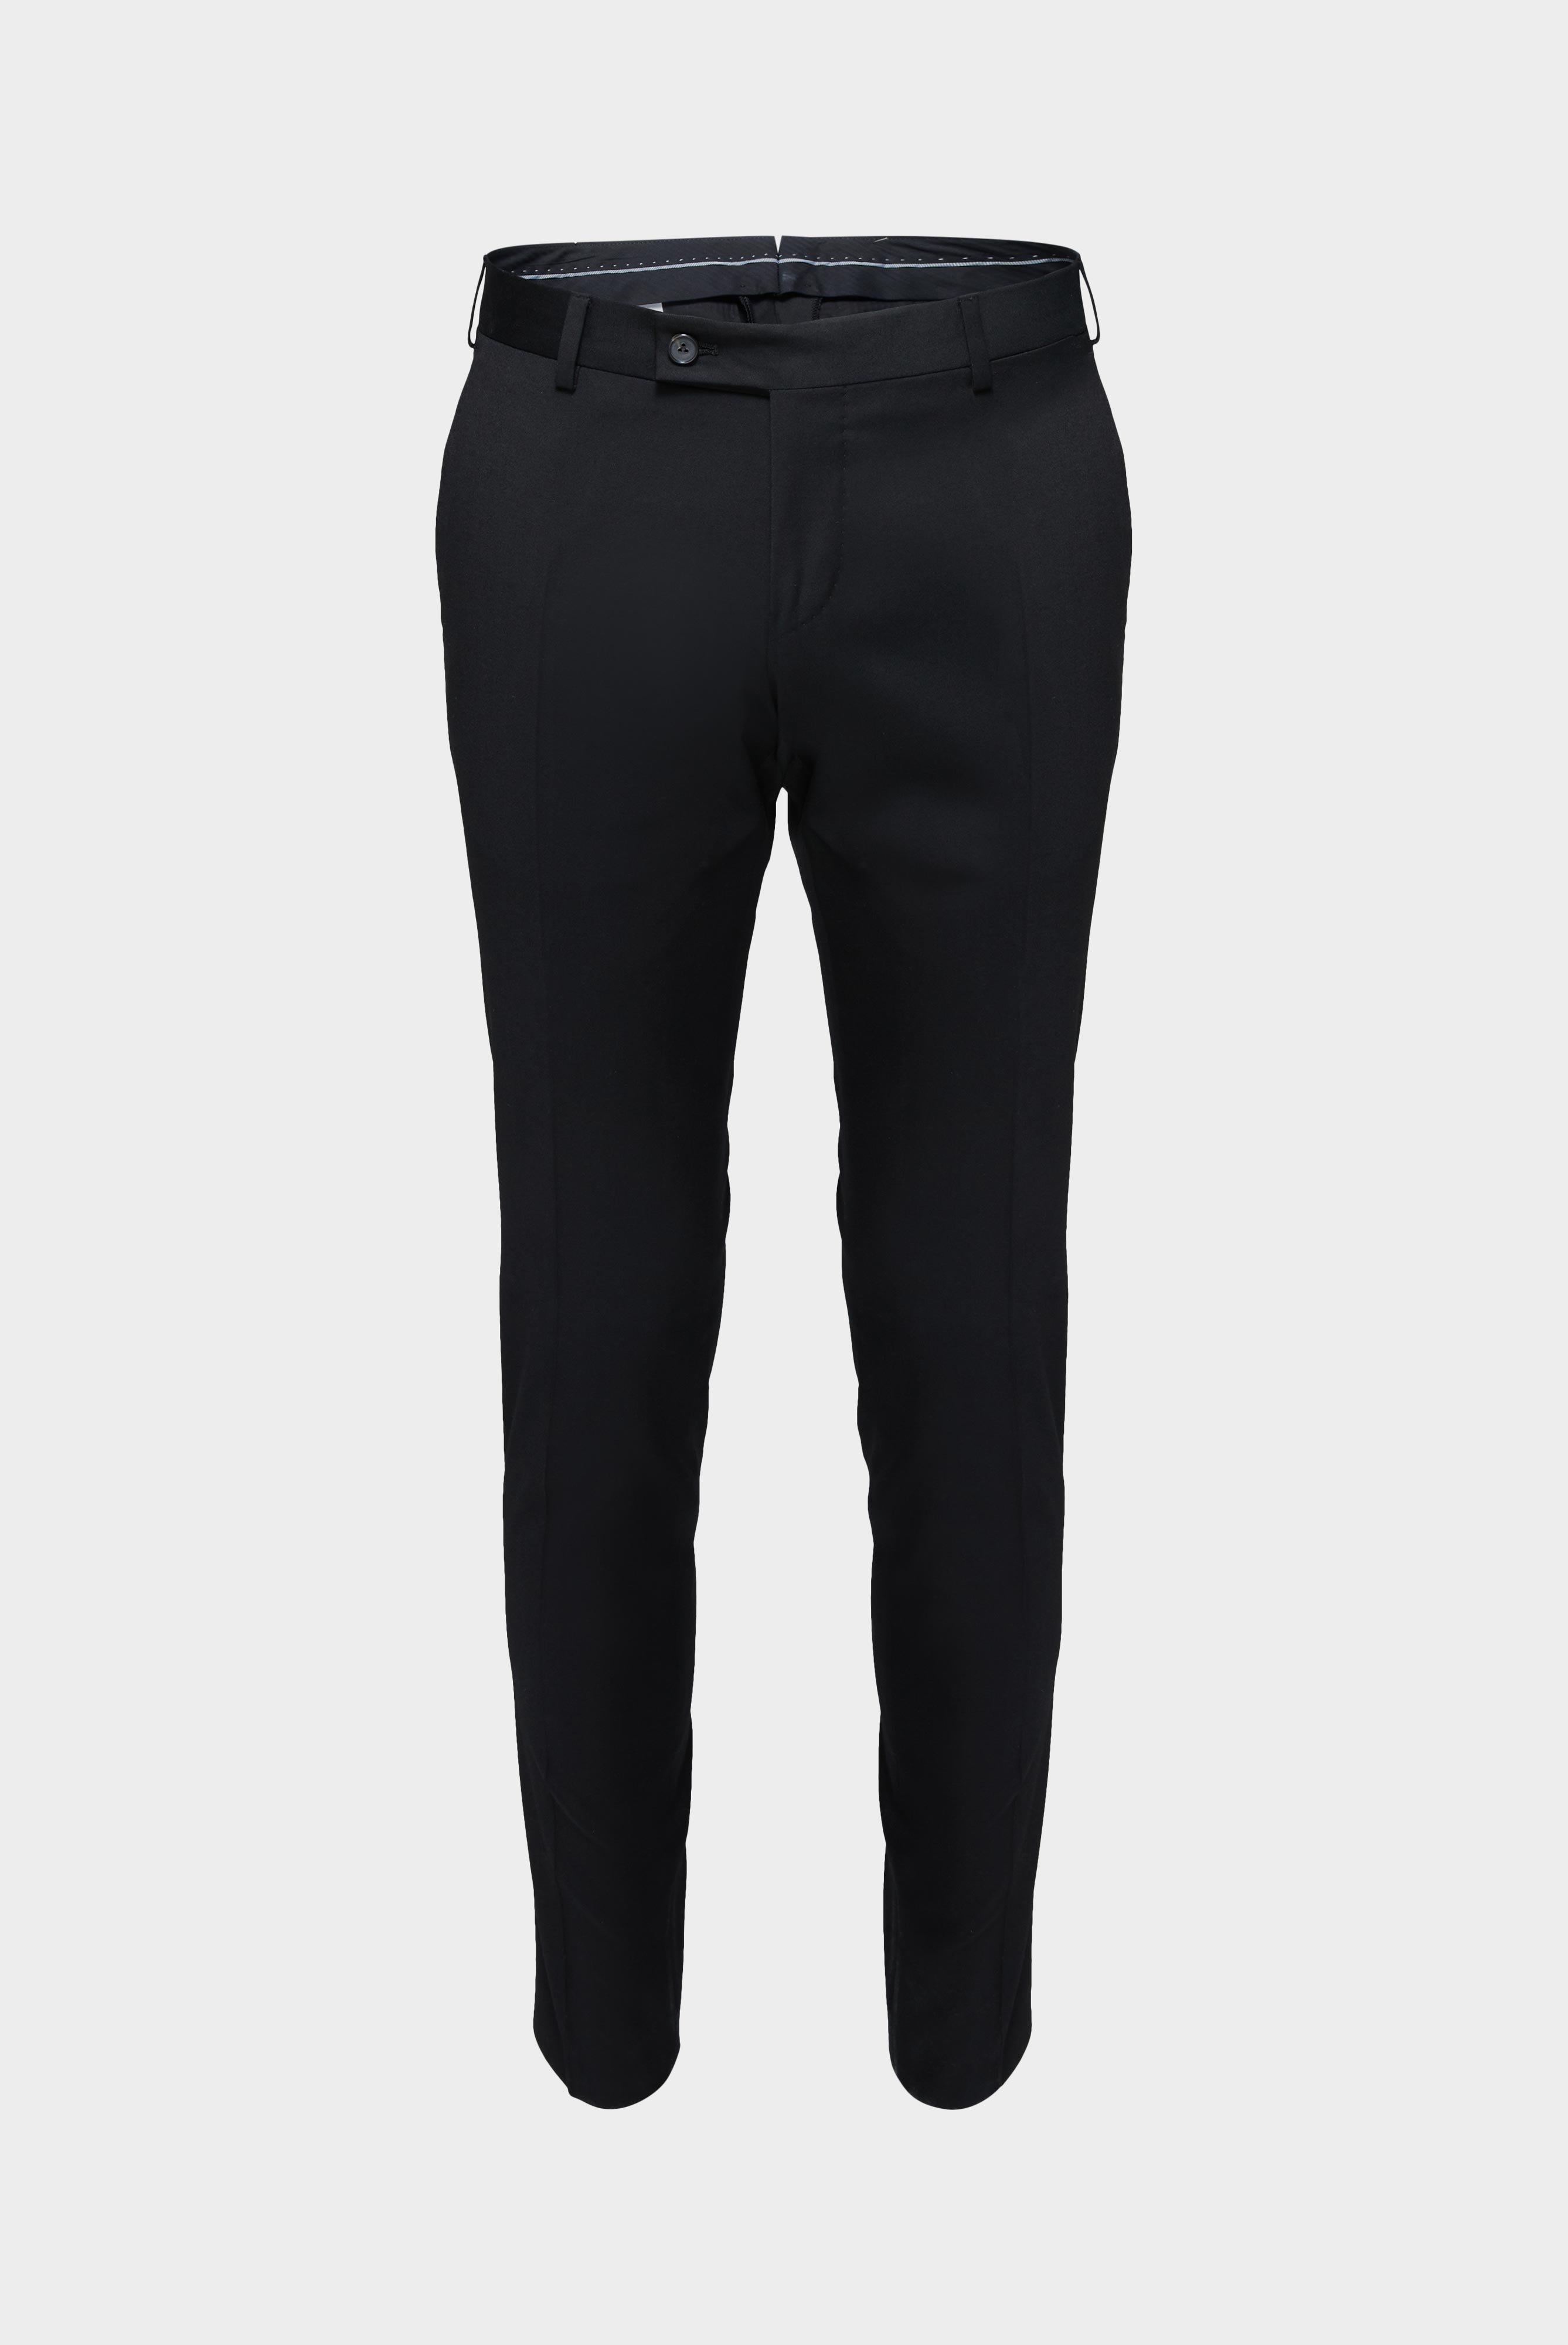 Jeans & Hosen+Hose aus Wolle Slim Fit+20.7880.16.H01010.099.31